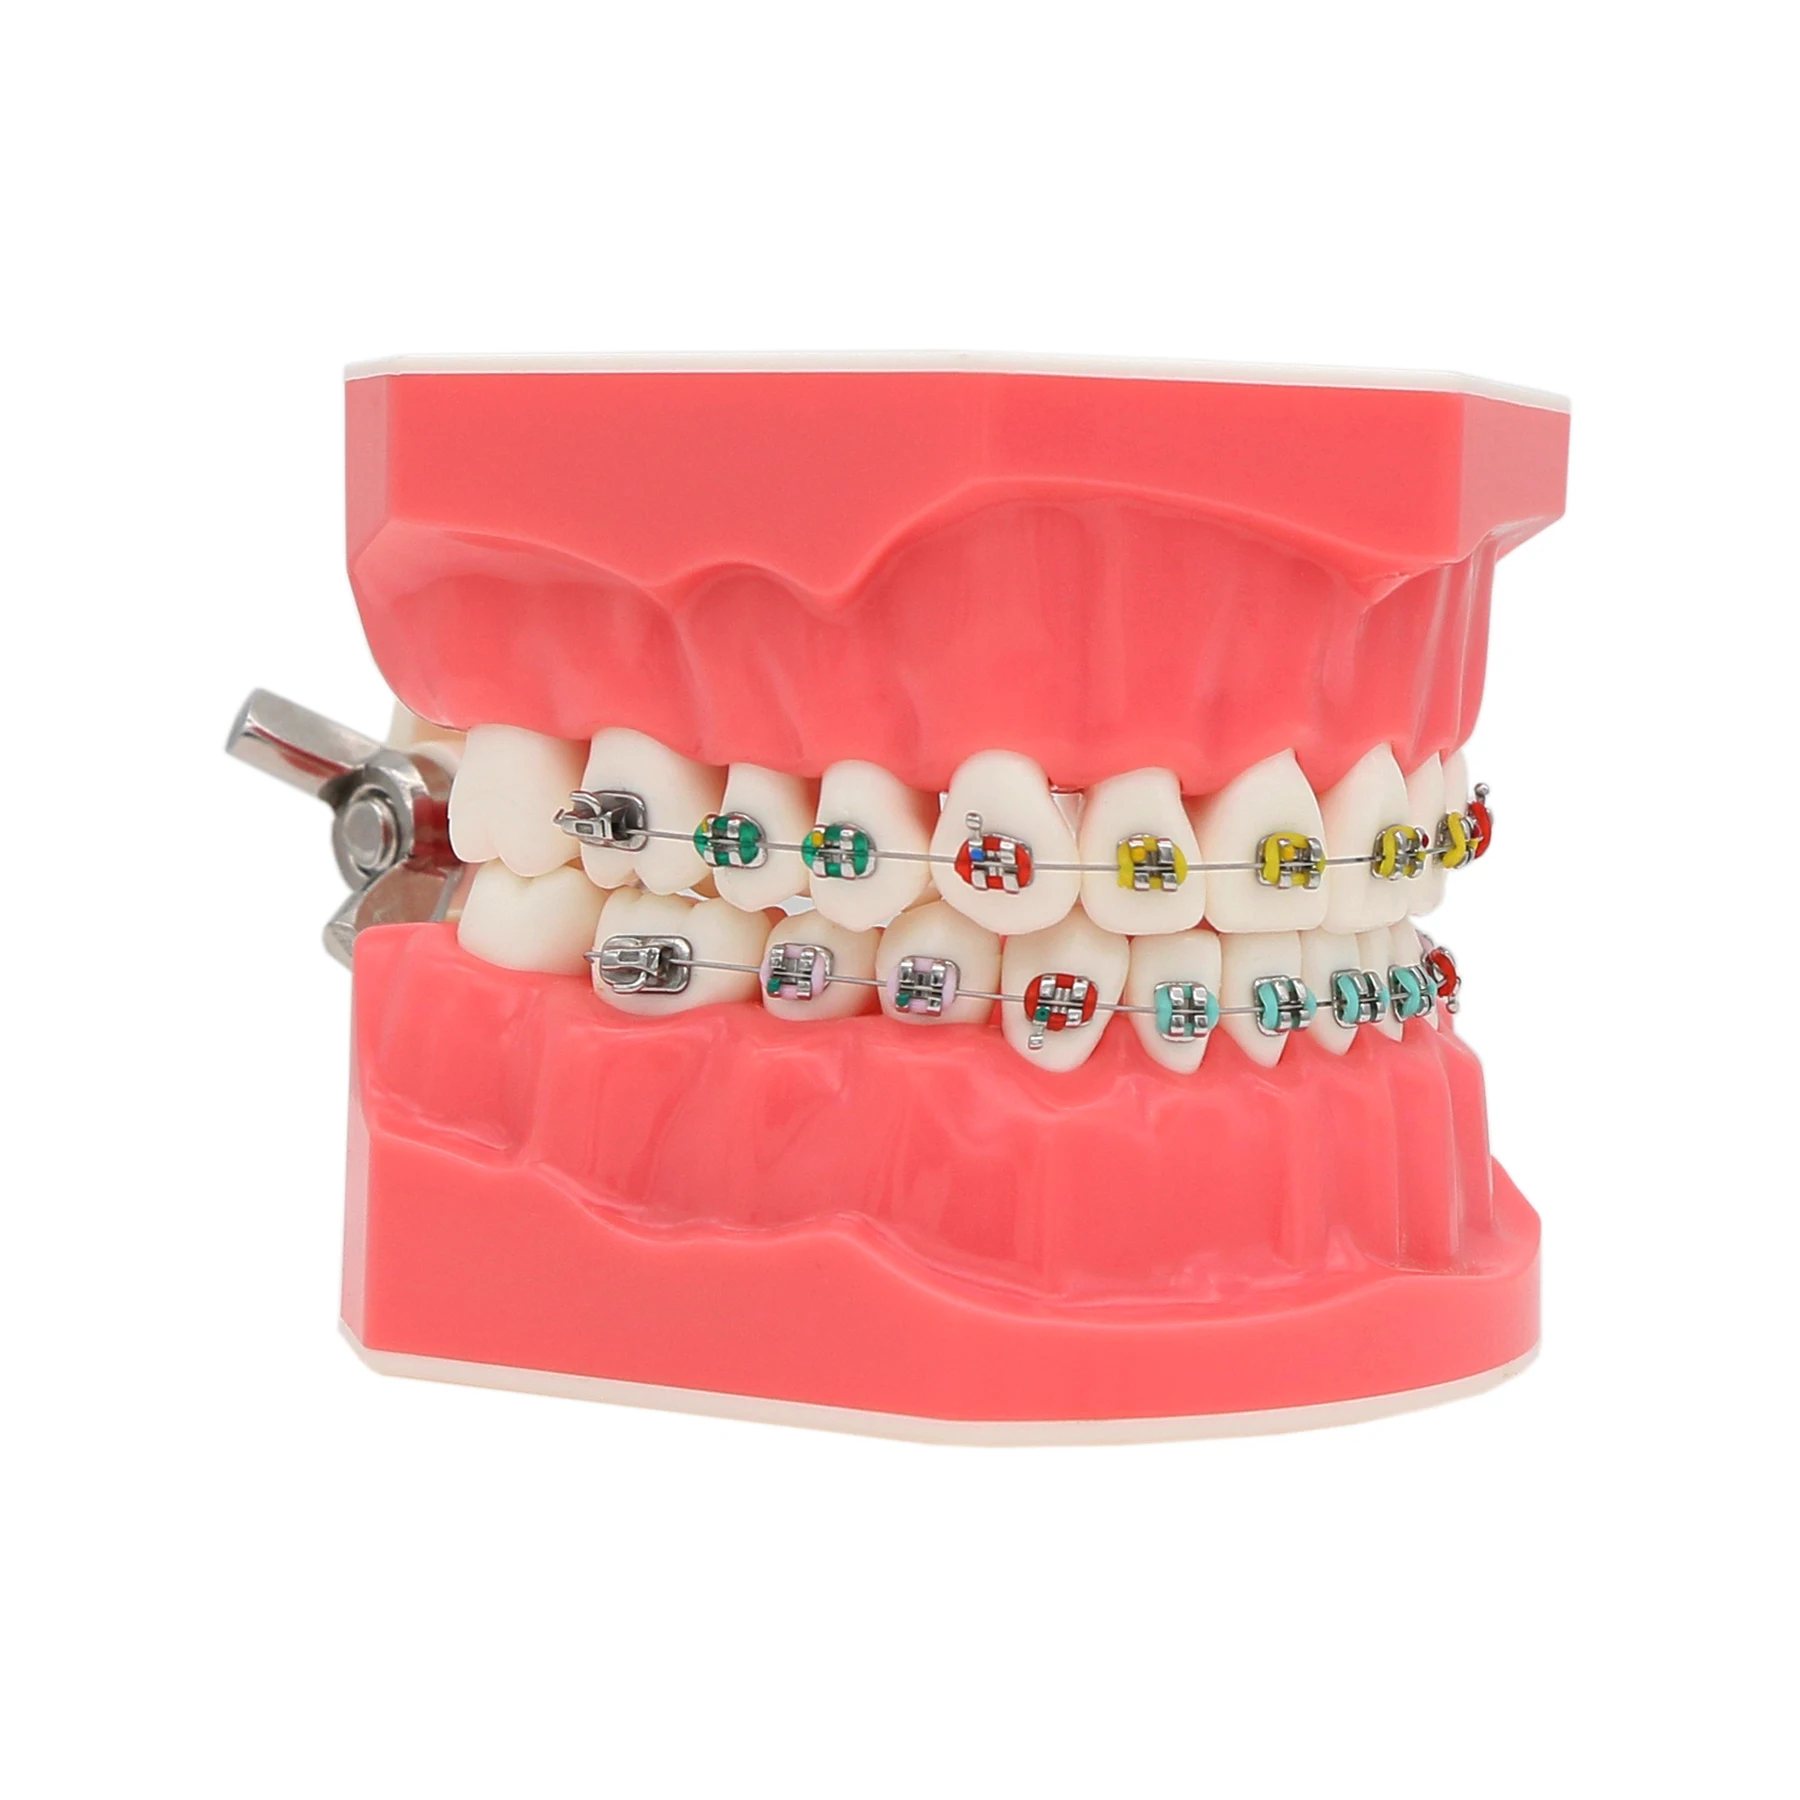 

Dental Typodont Orthodontic Teeth Model M7010-2 with Metal Brackets Braces